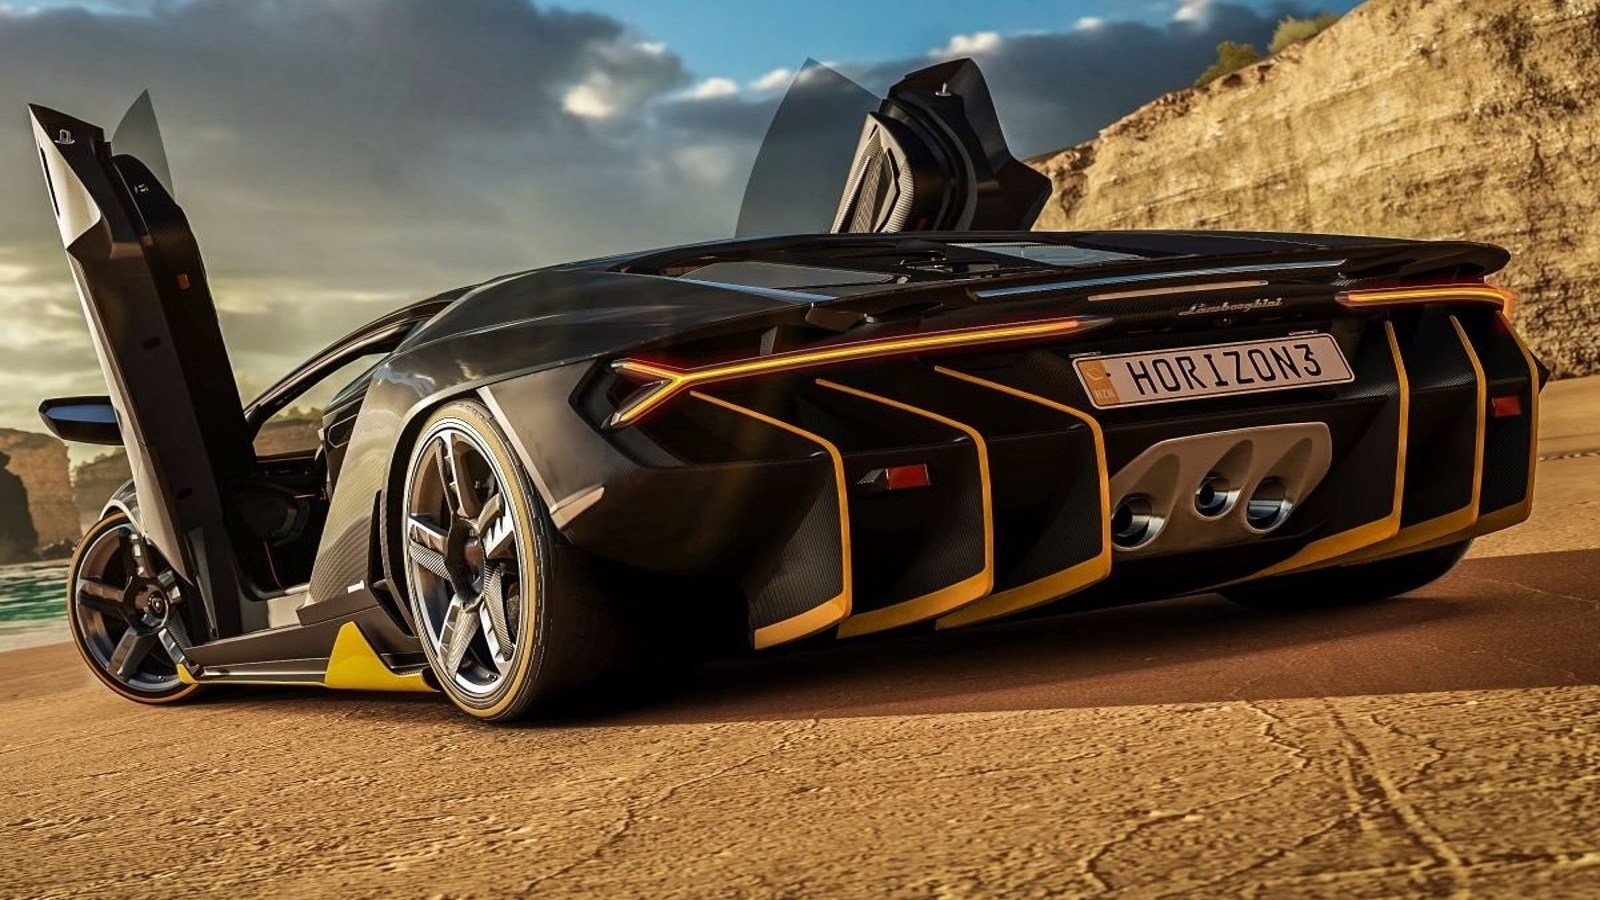 Forza Horizon 3 Launch Trailer Speeds Through Australia - The